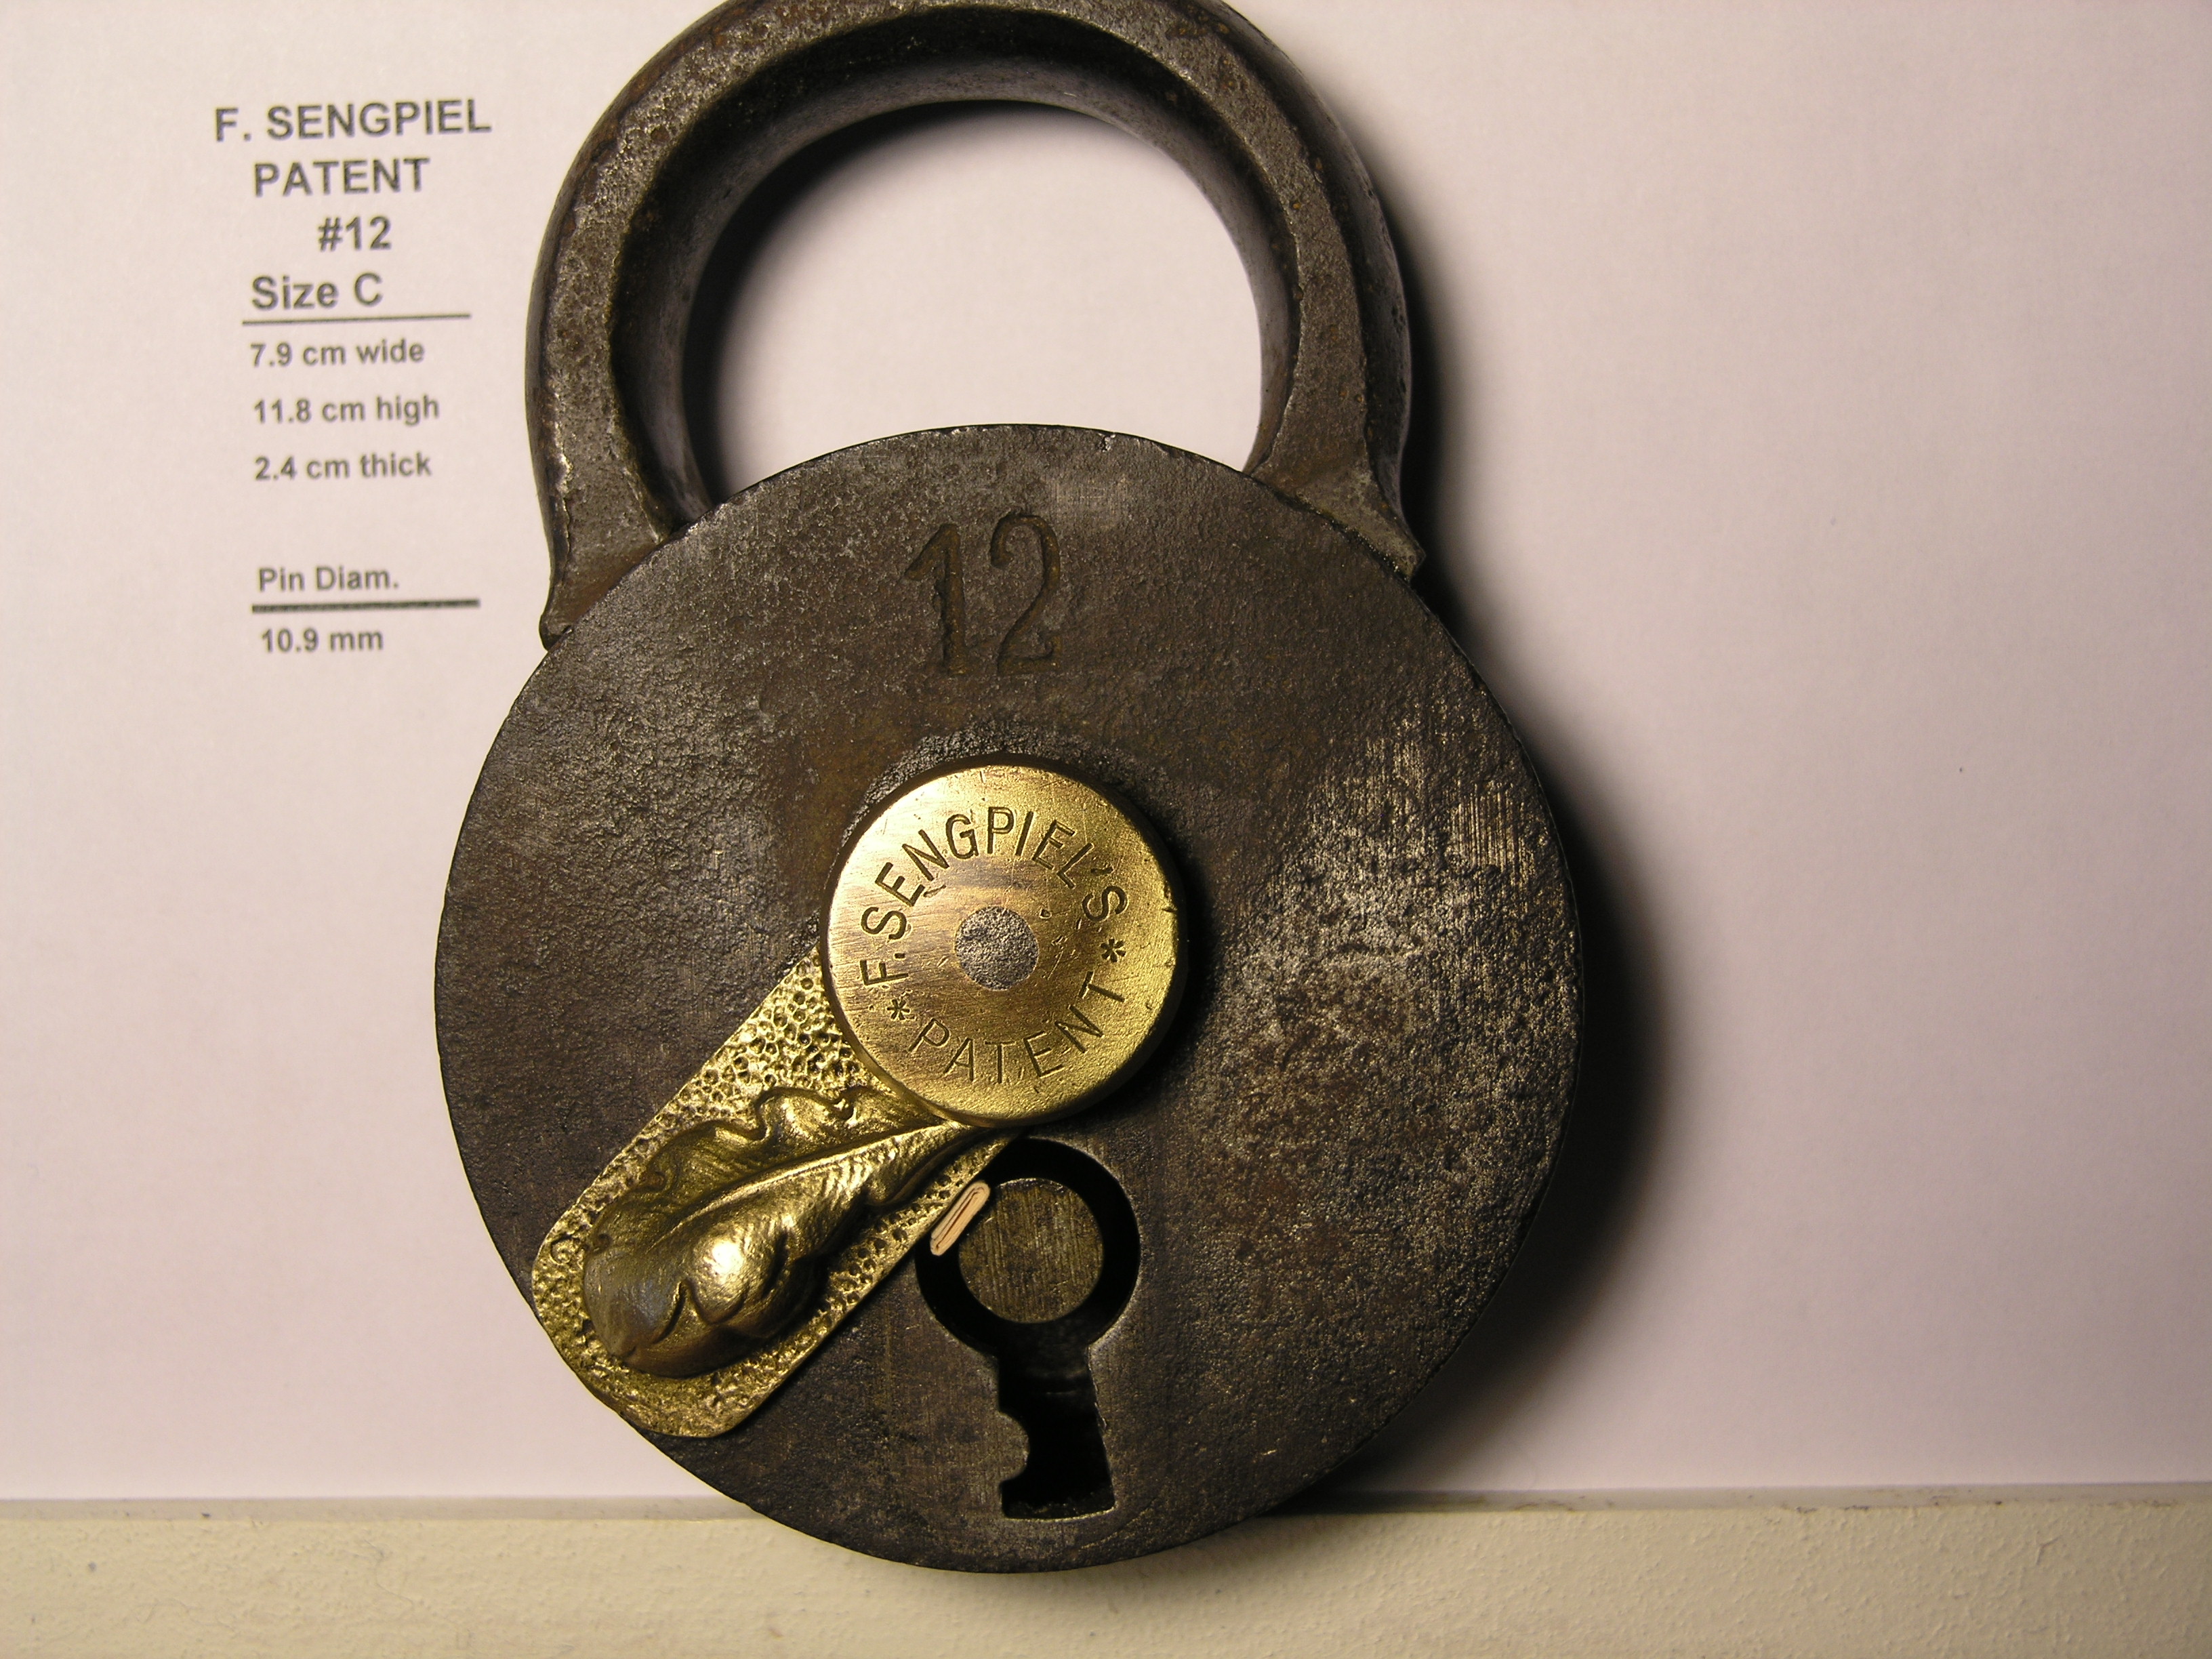 Antique German Padlock-Lock F. Sengpiels Patent with Otiginal Key